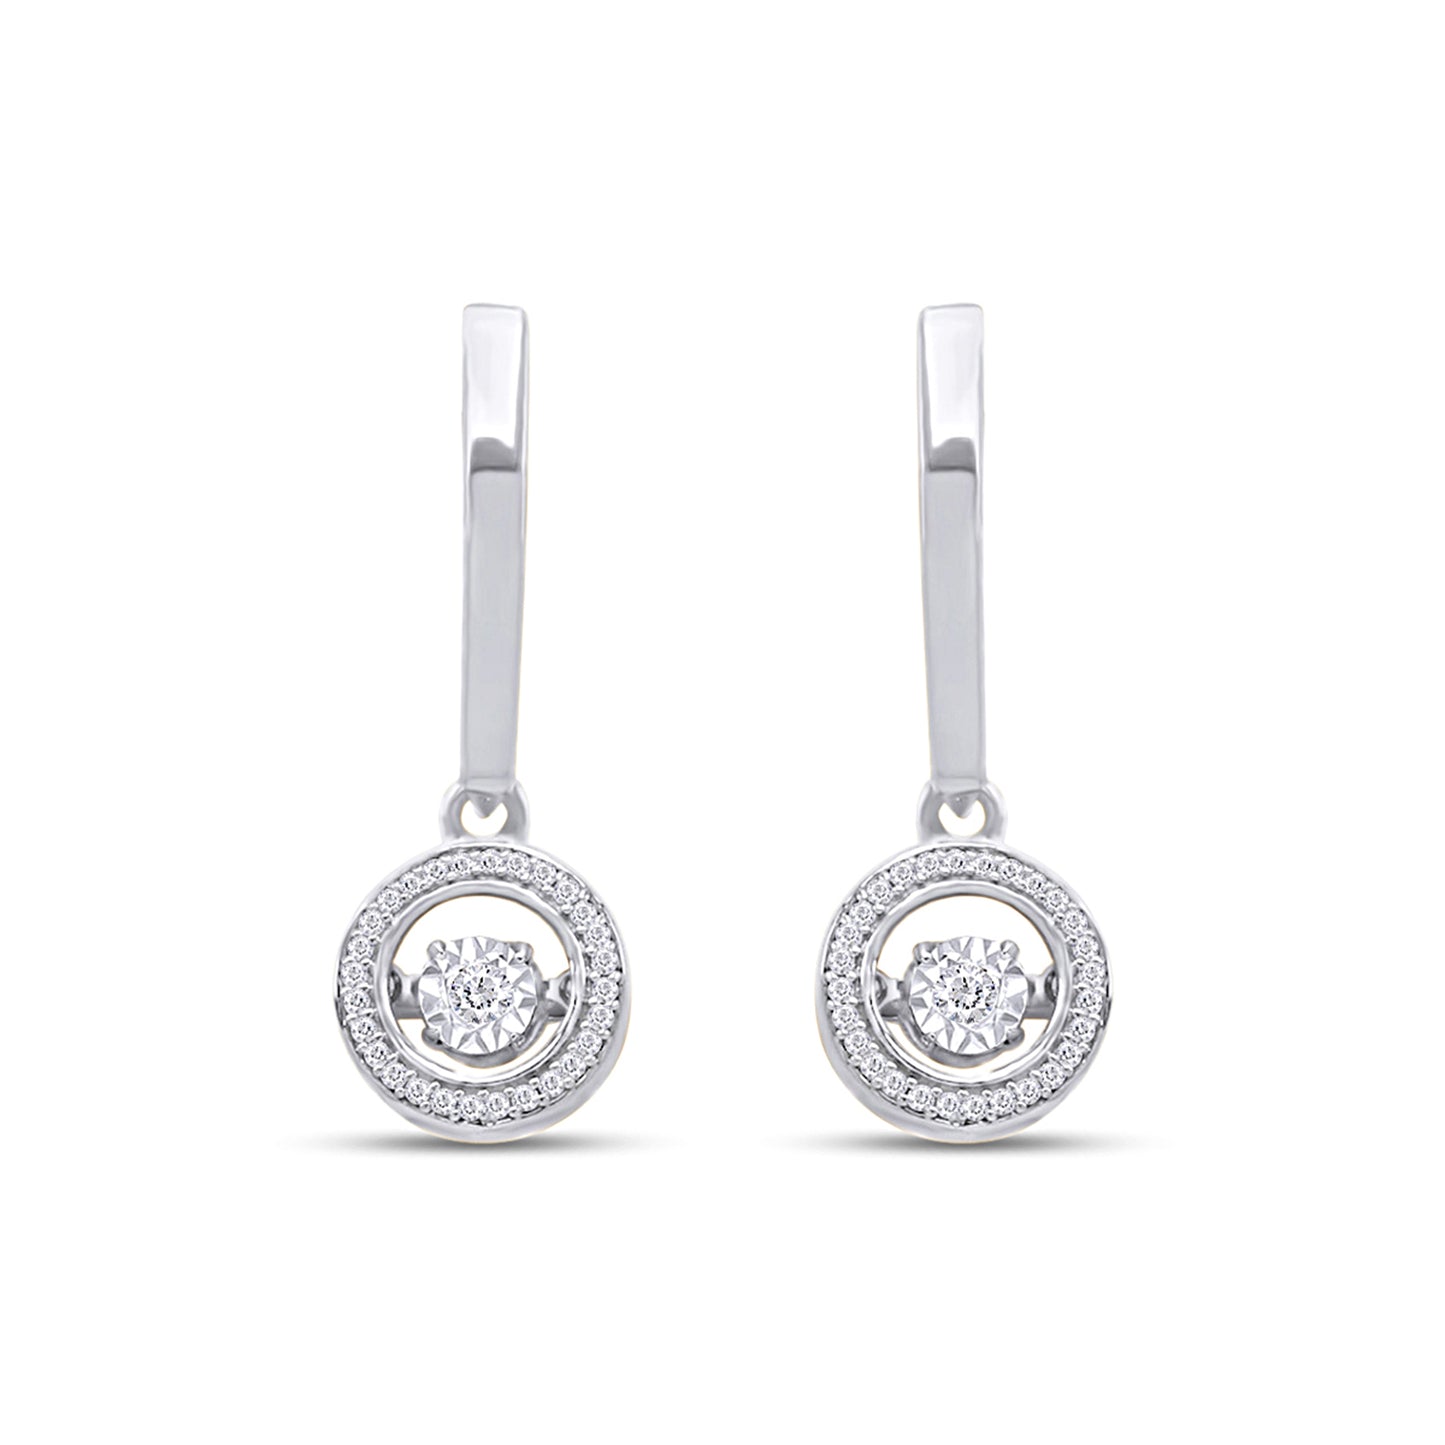 White Cubic Zirconia Dancing Halo Dangle Earrings in 925 Sterling Silver